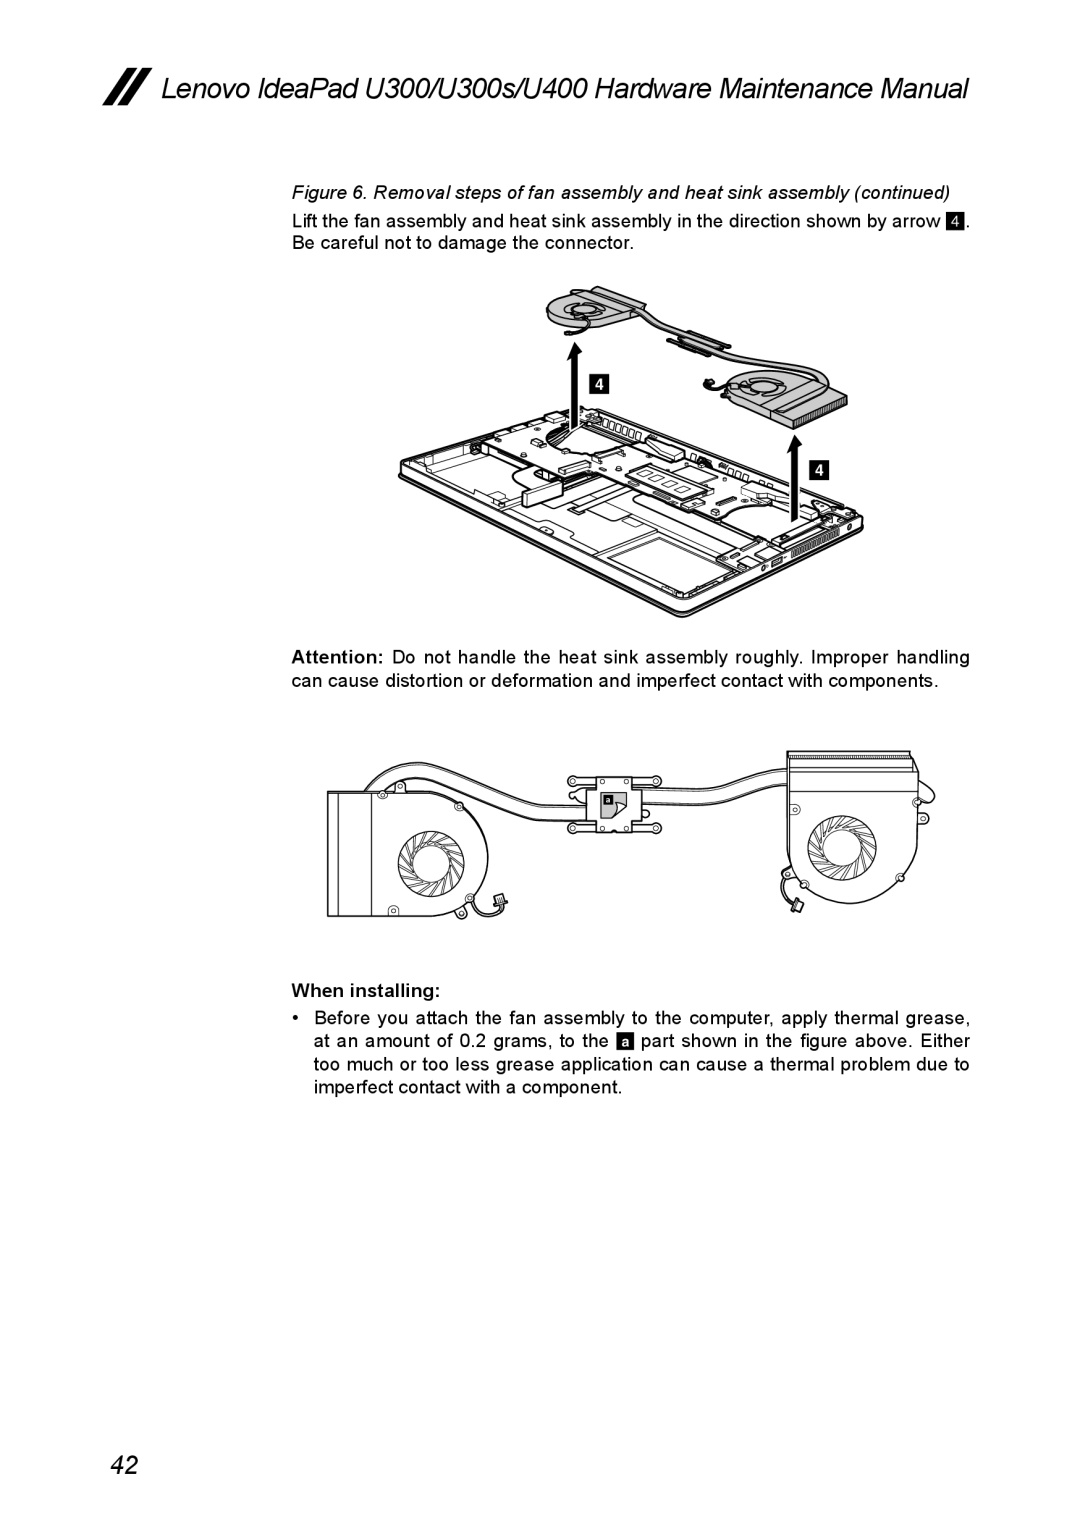 Lenovo U300S manual Lenovo IdeaPad U300/U300s/U400 Hardware Maintenance Manual, When installing 